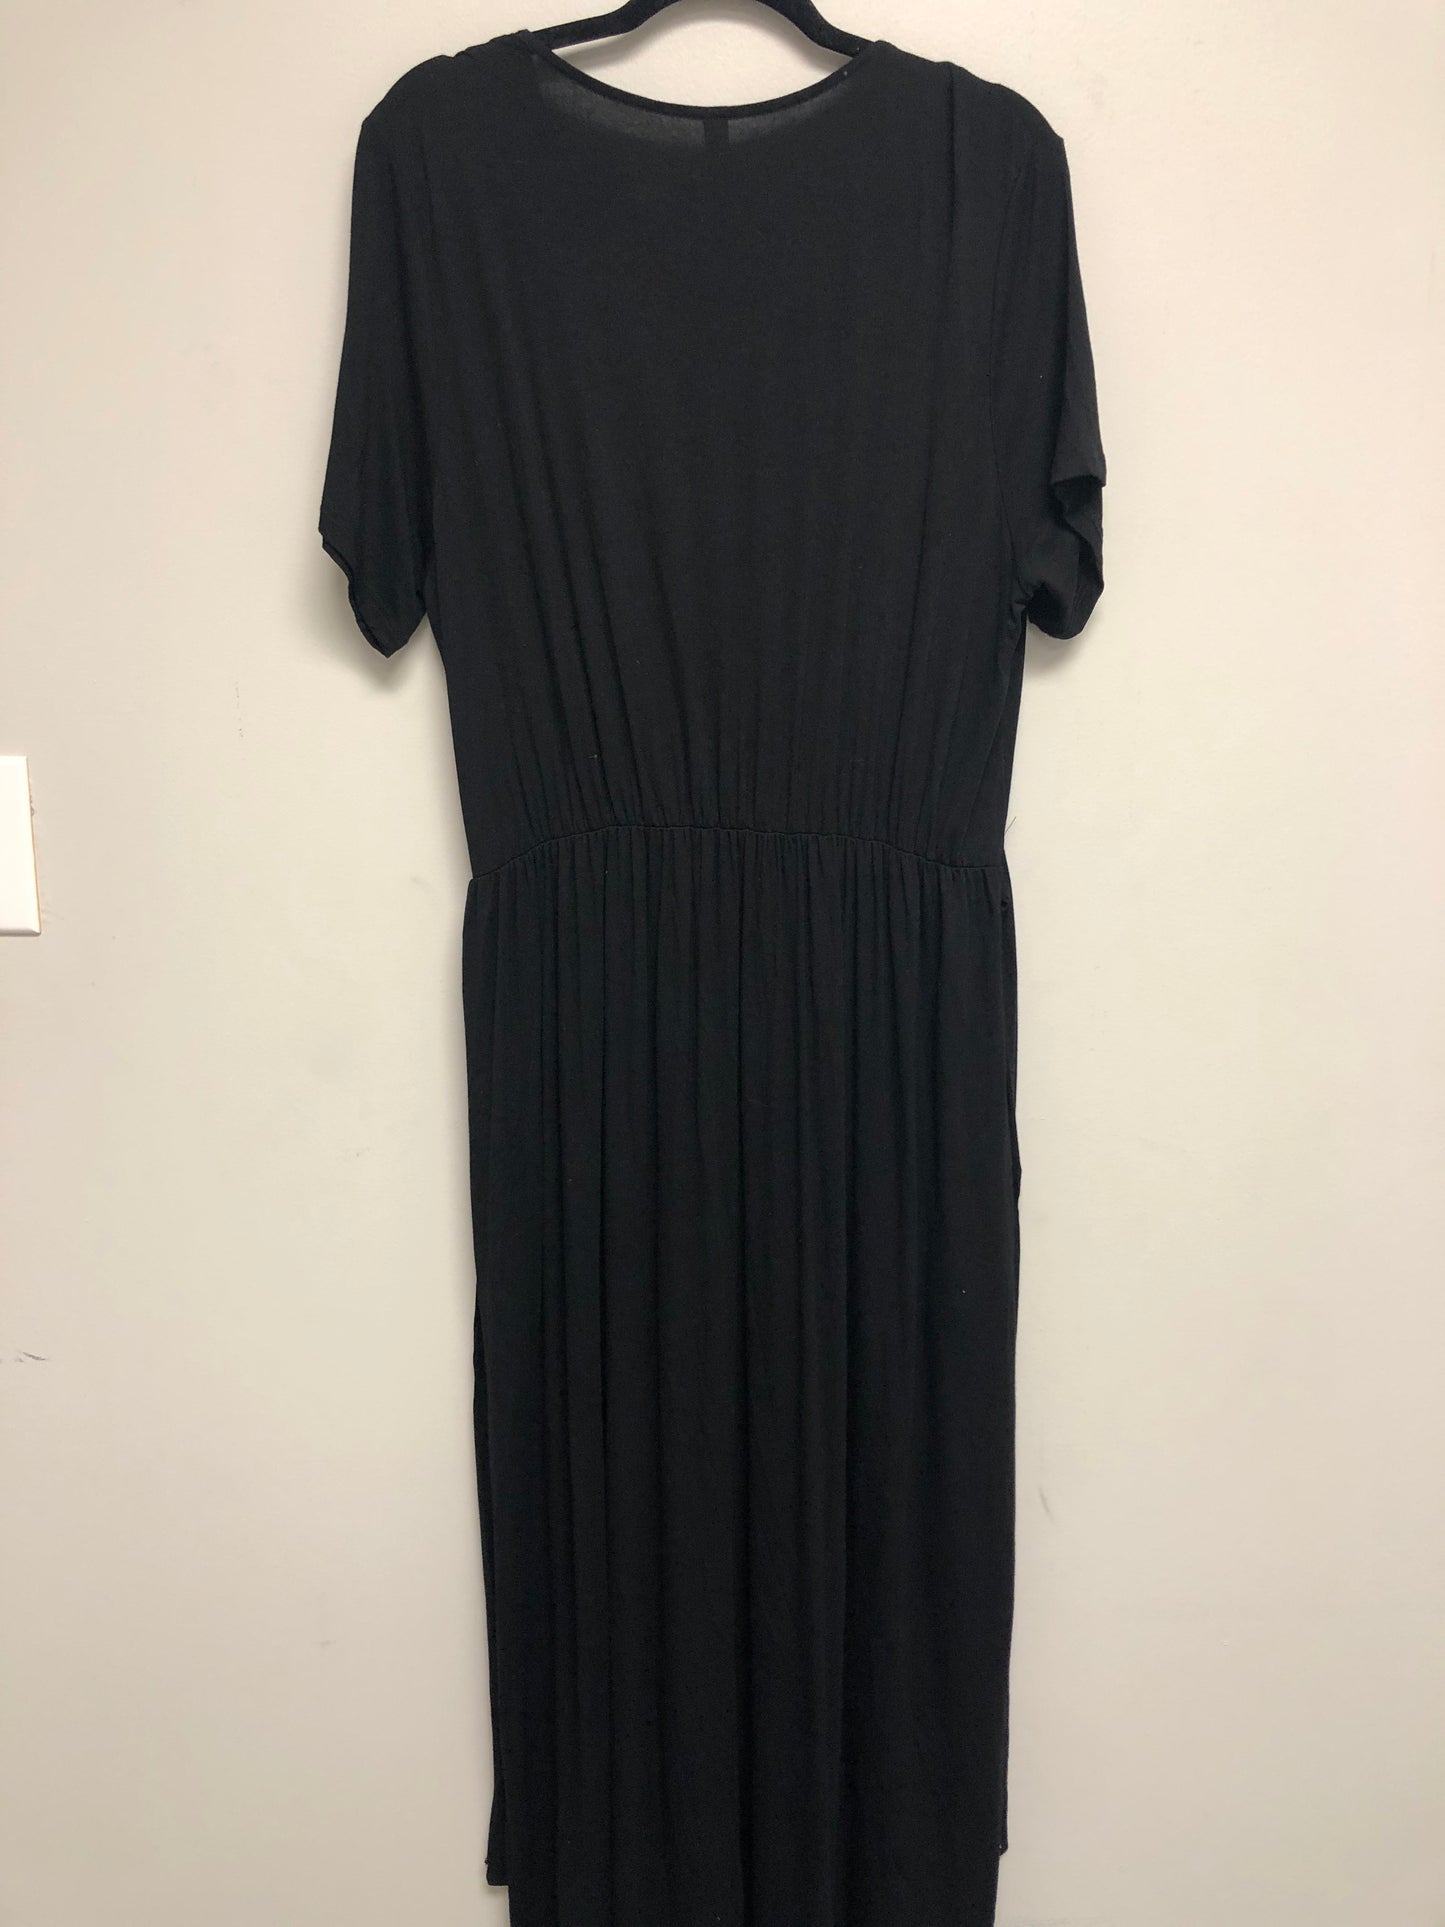 Outlet 6425 - Latched Mama Petal Maxi Nursing Dress - Black - 1X